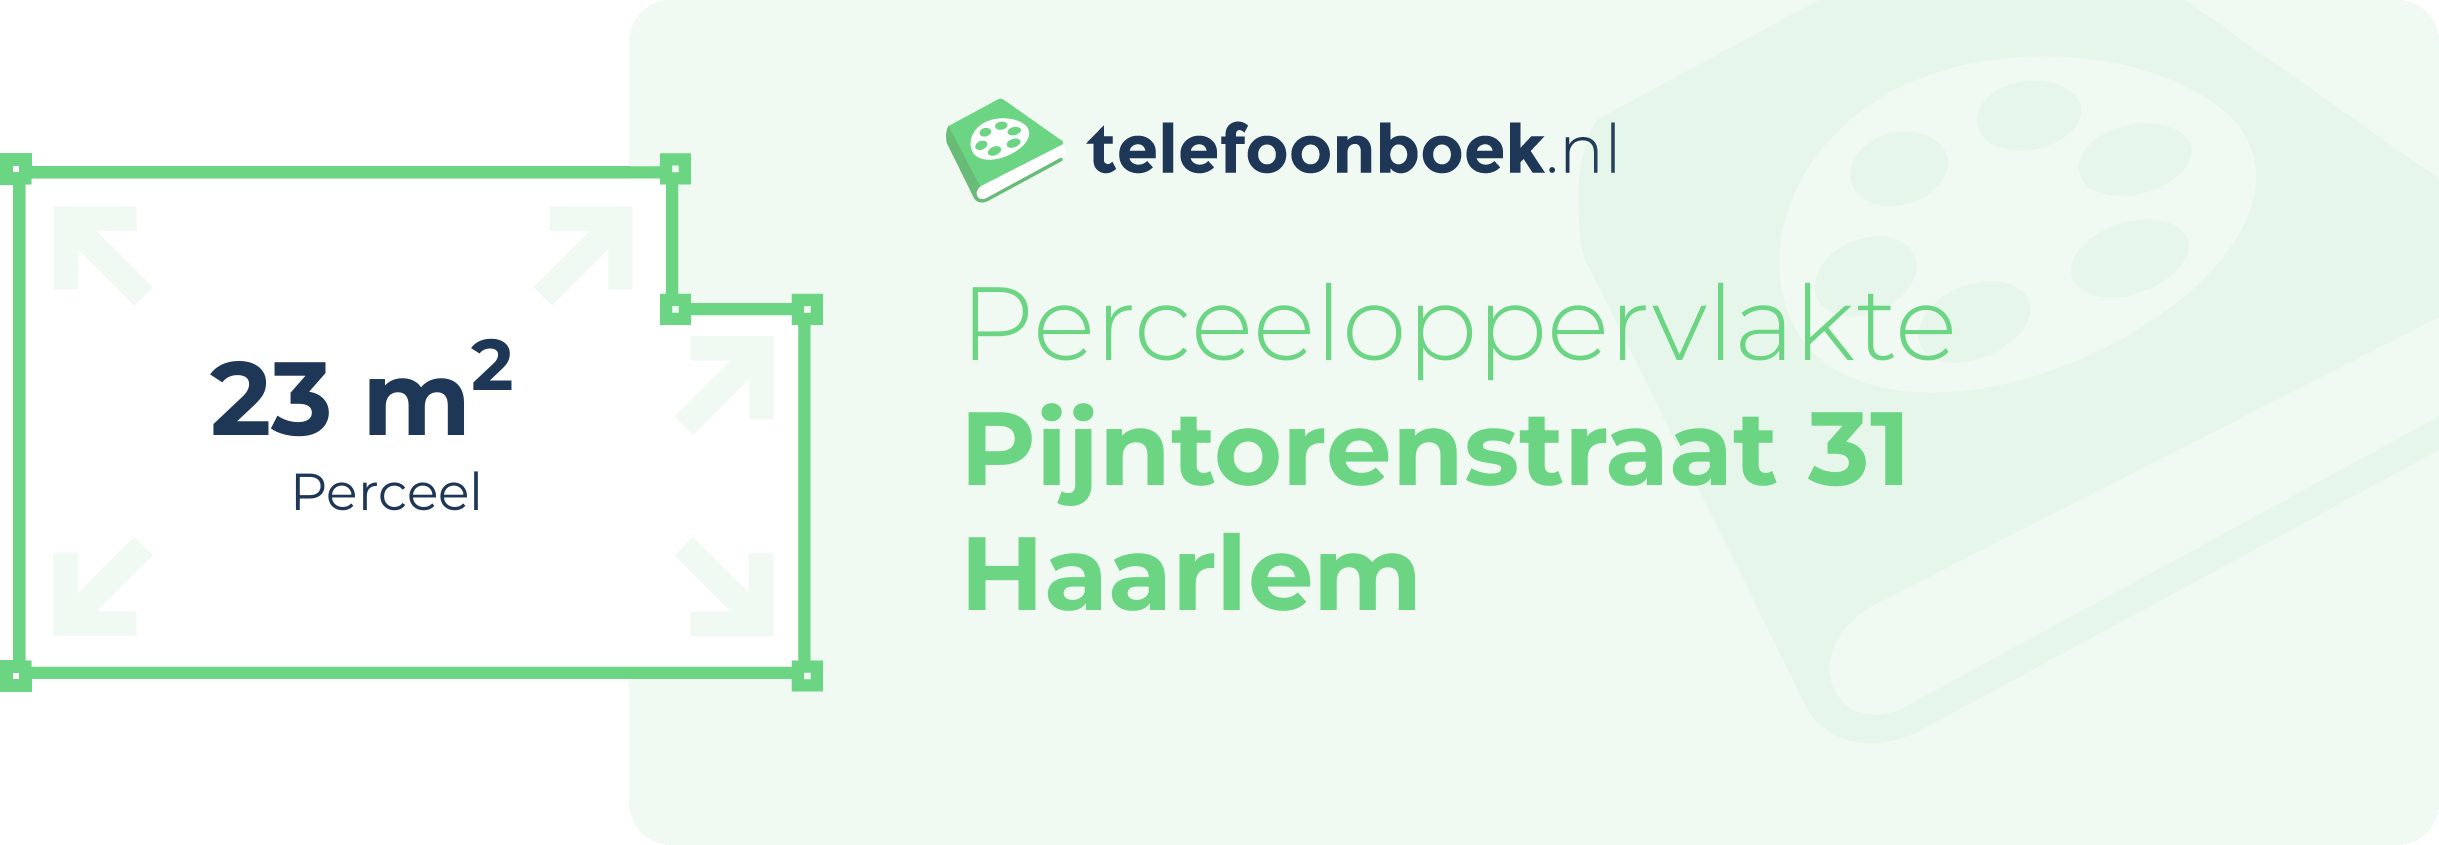 Perceeloppervlakte Pijntorenstraat 31 Haarlem